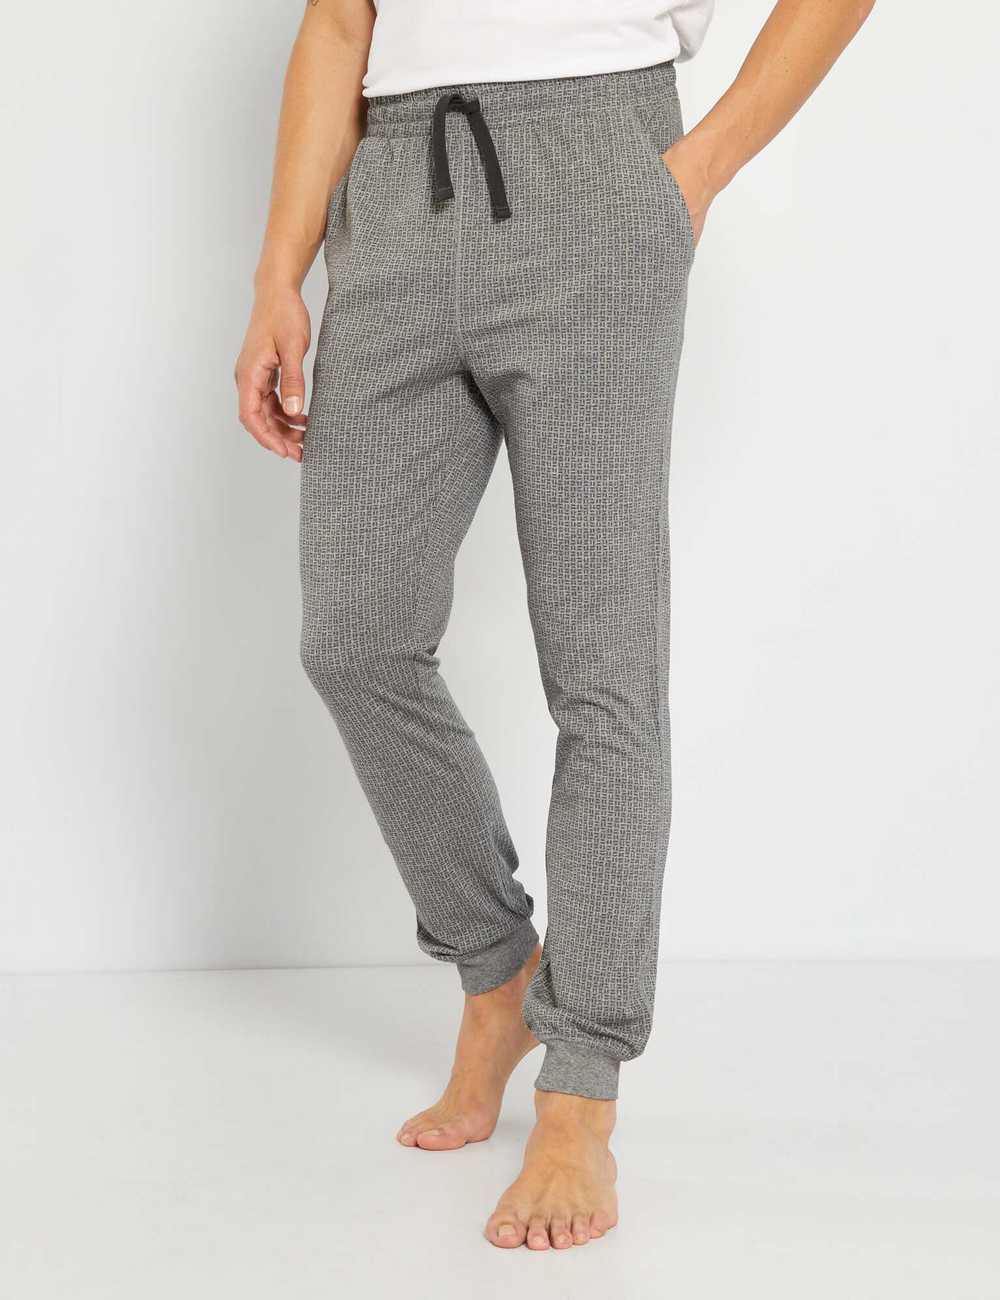 SPECIALMAGIC Pajama Pants for Women Sleepwear UAE